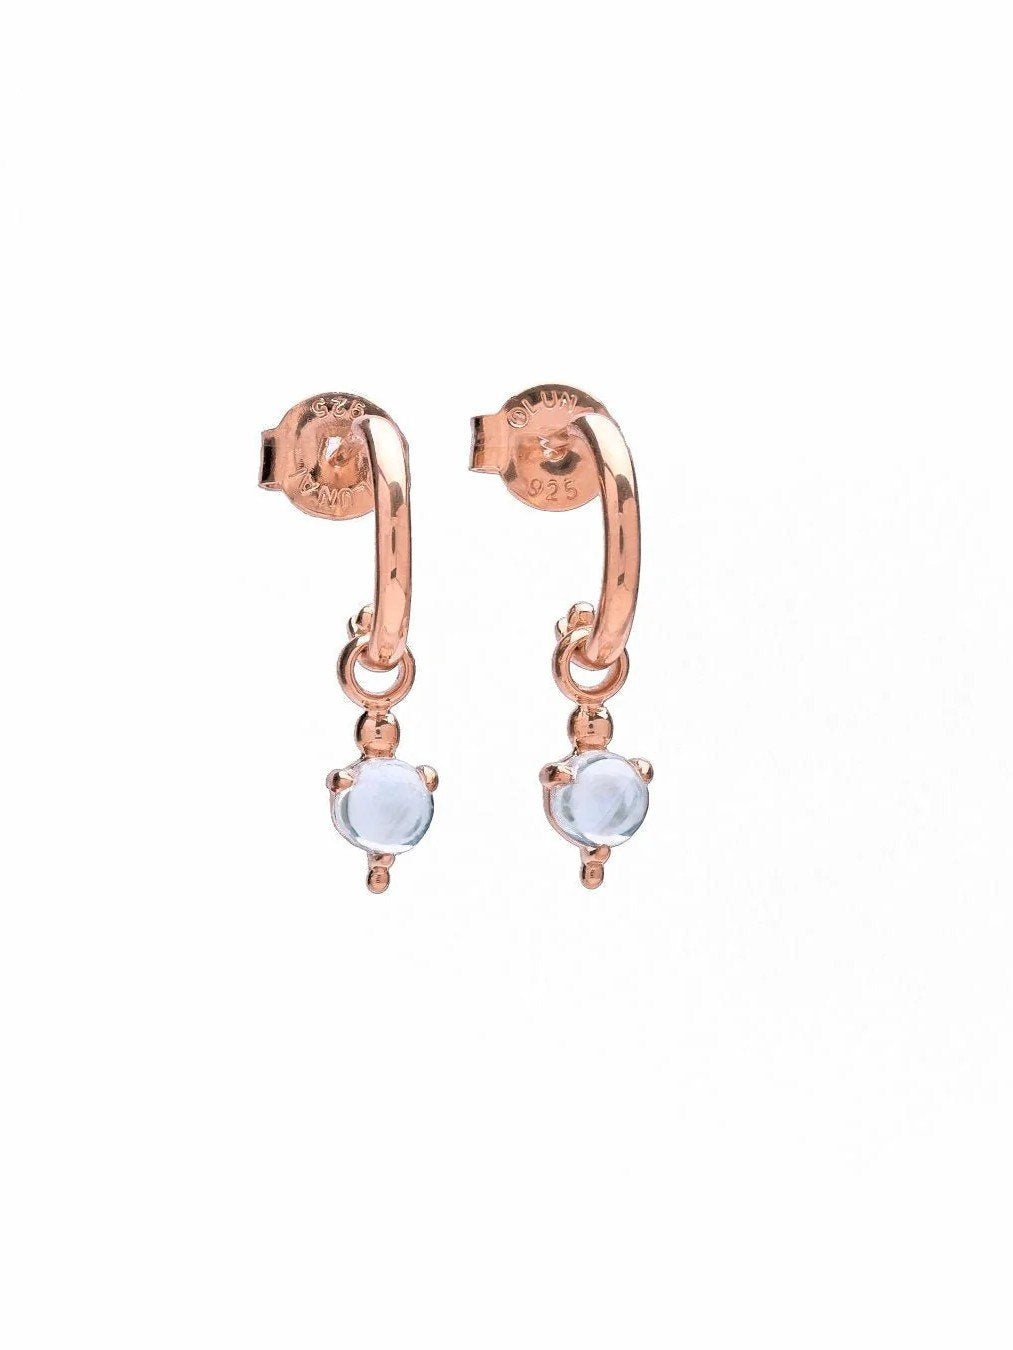 Claire Hoop Earrings - 18K Rose Gold PlatedBackUpItemsBirthstone HoopsLunai Jewelry